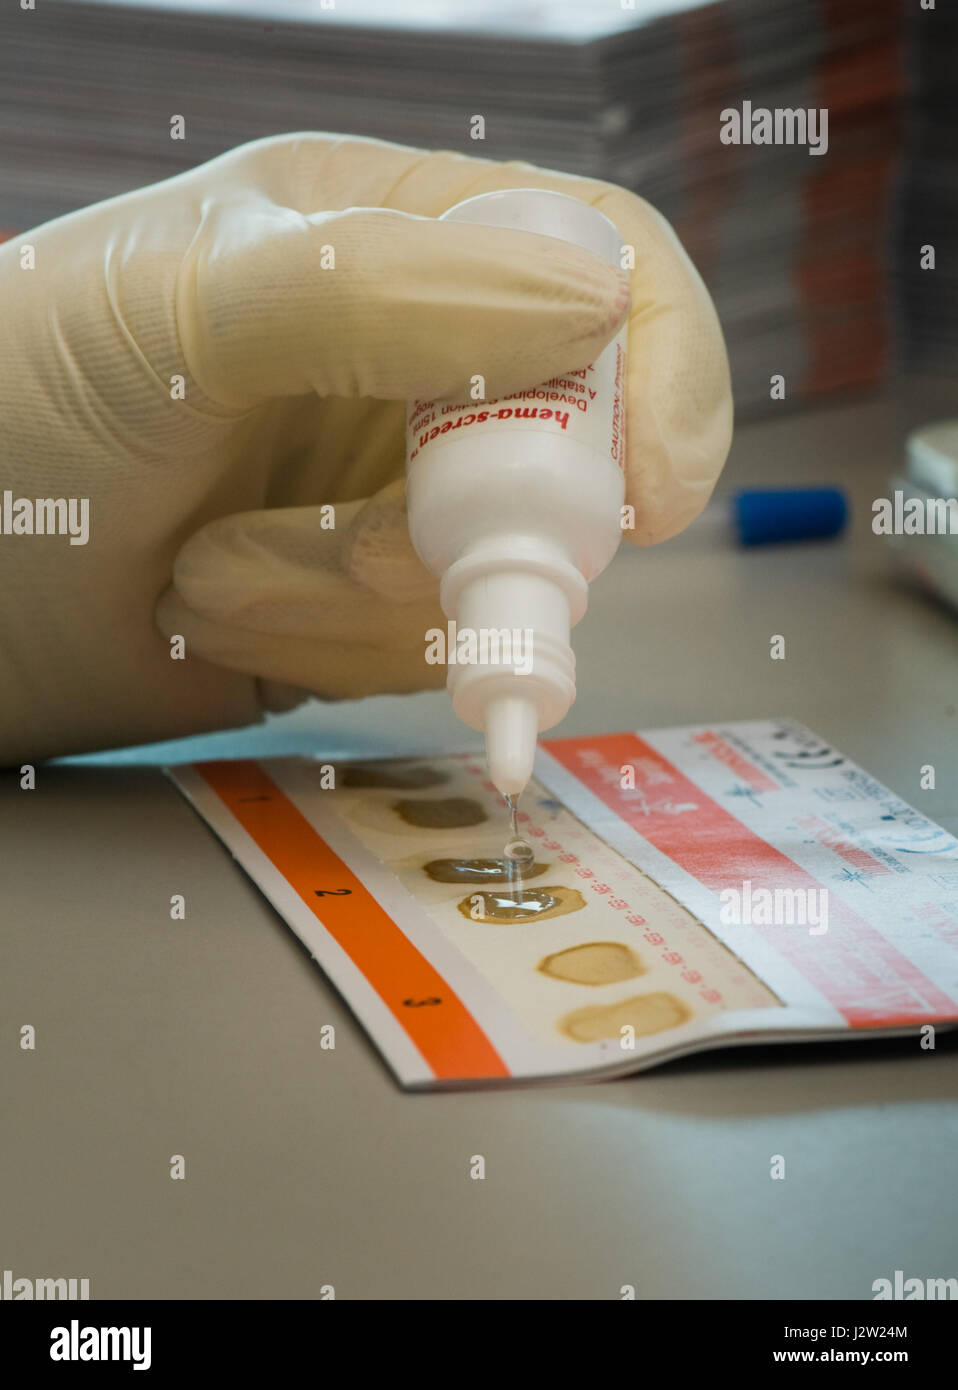 Test di campioni fecali su un intestino scheda di screening per la presenza di occulta (nascosta) sangue Foto Stock